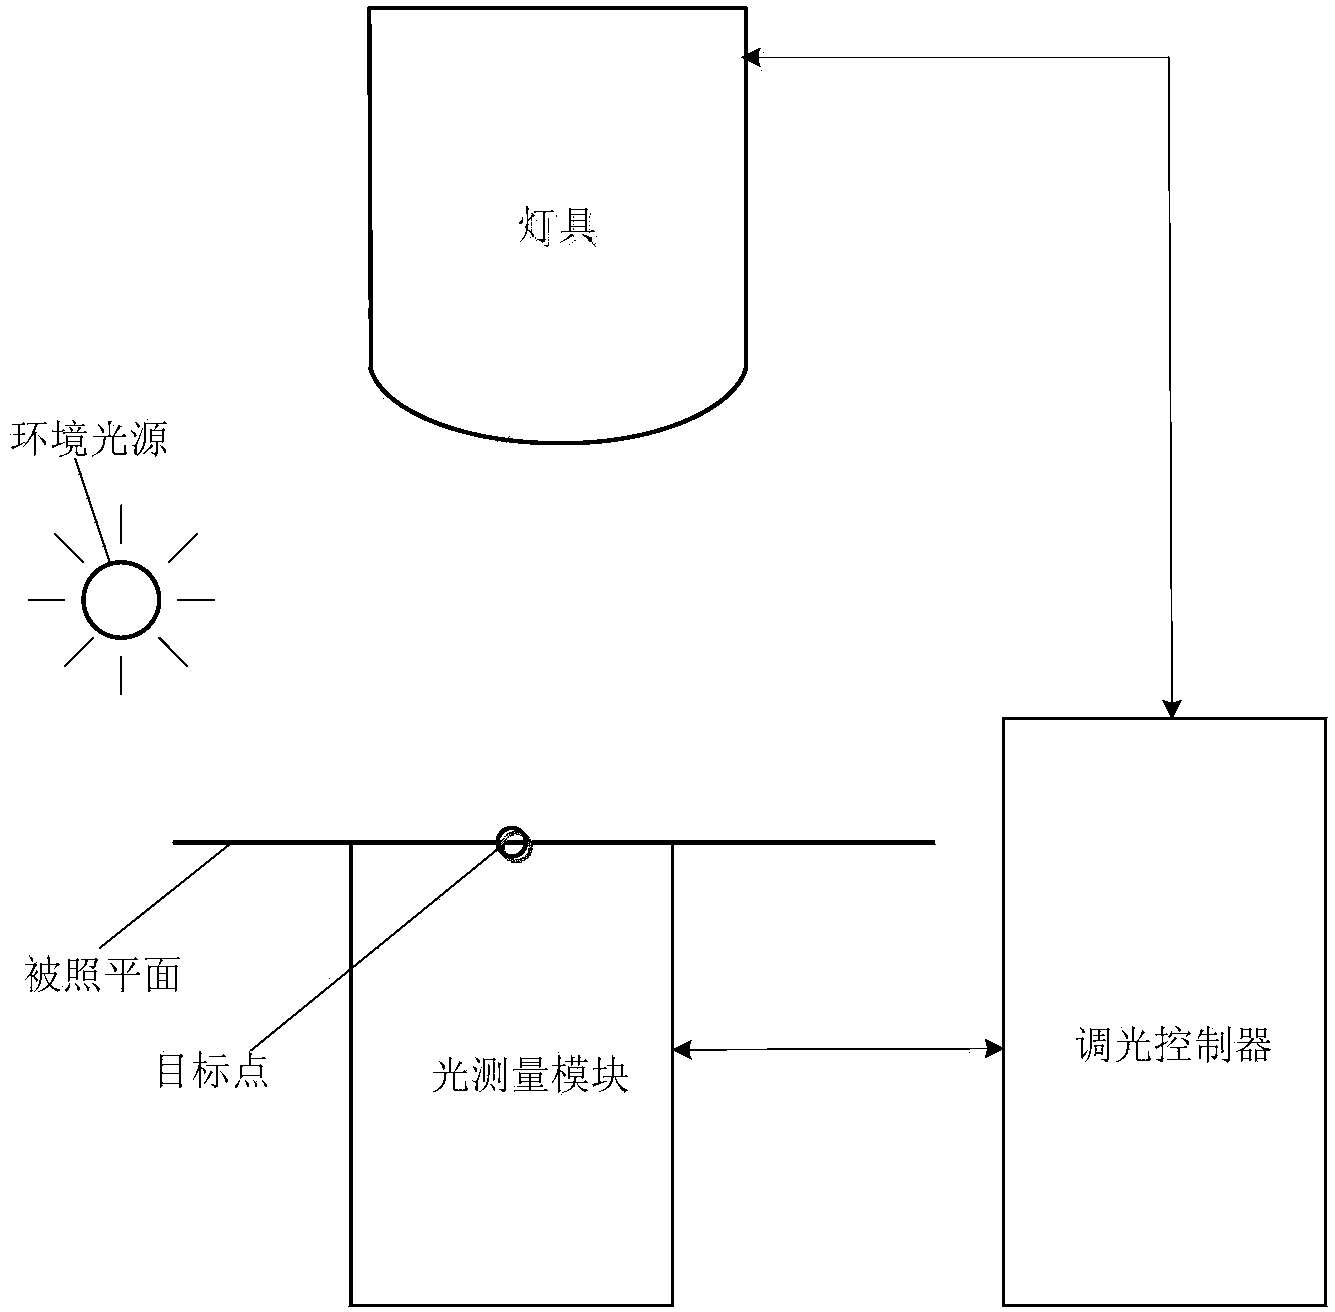 Illumination control method and system